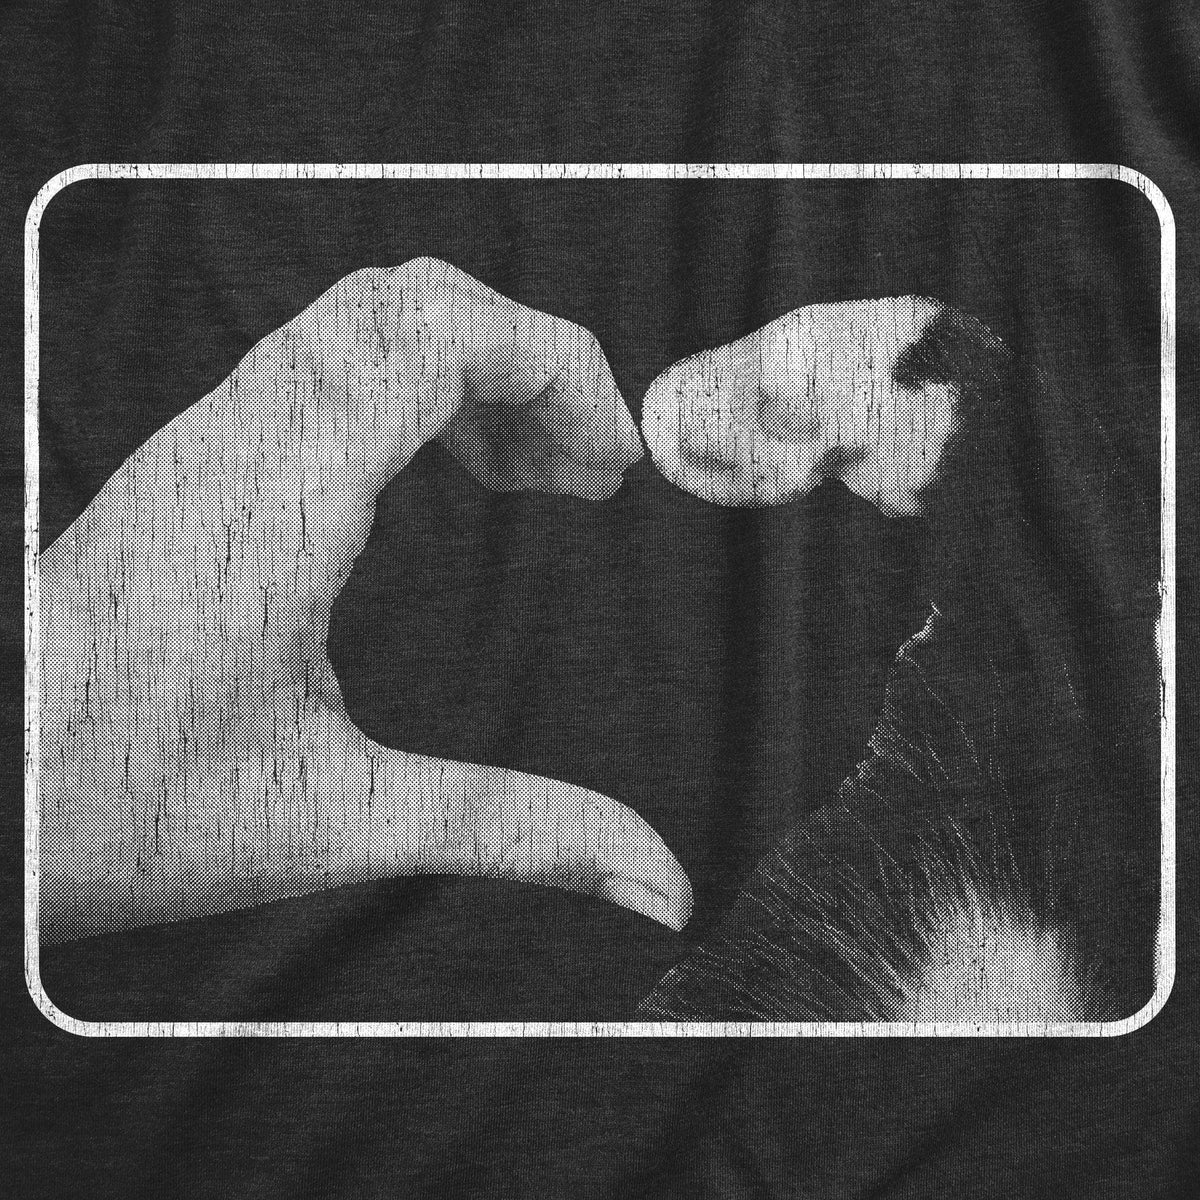 Hand Paw Heart Women&#39;s Tshirt  -  Crazy Dog T-Shirts